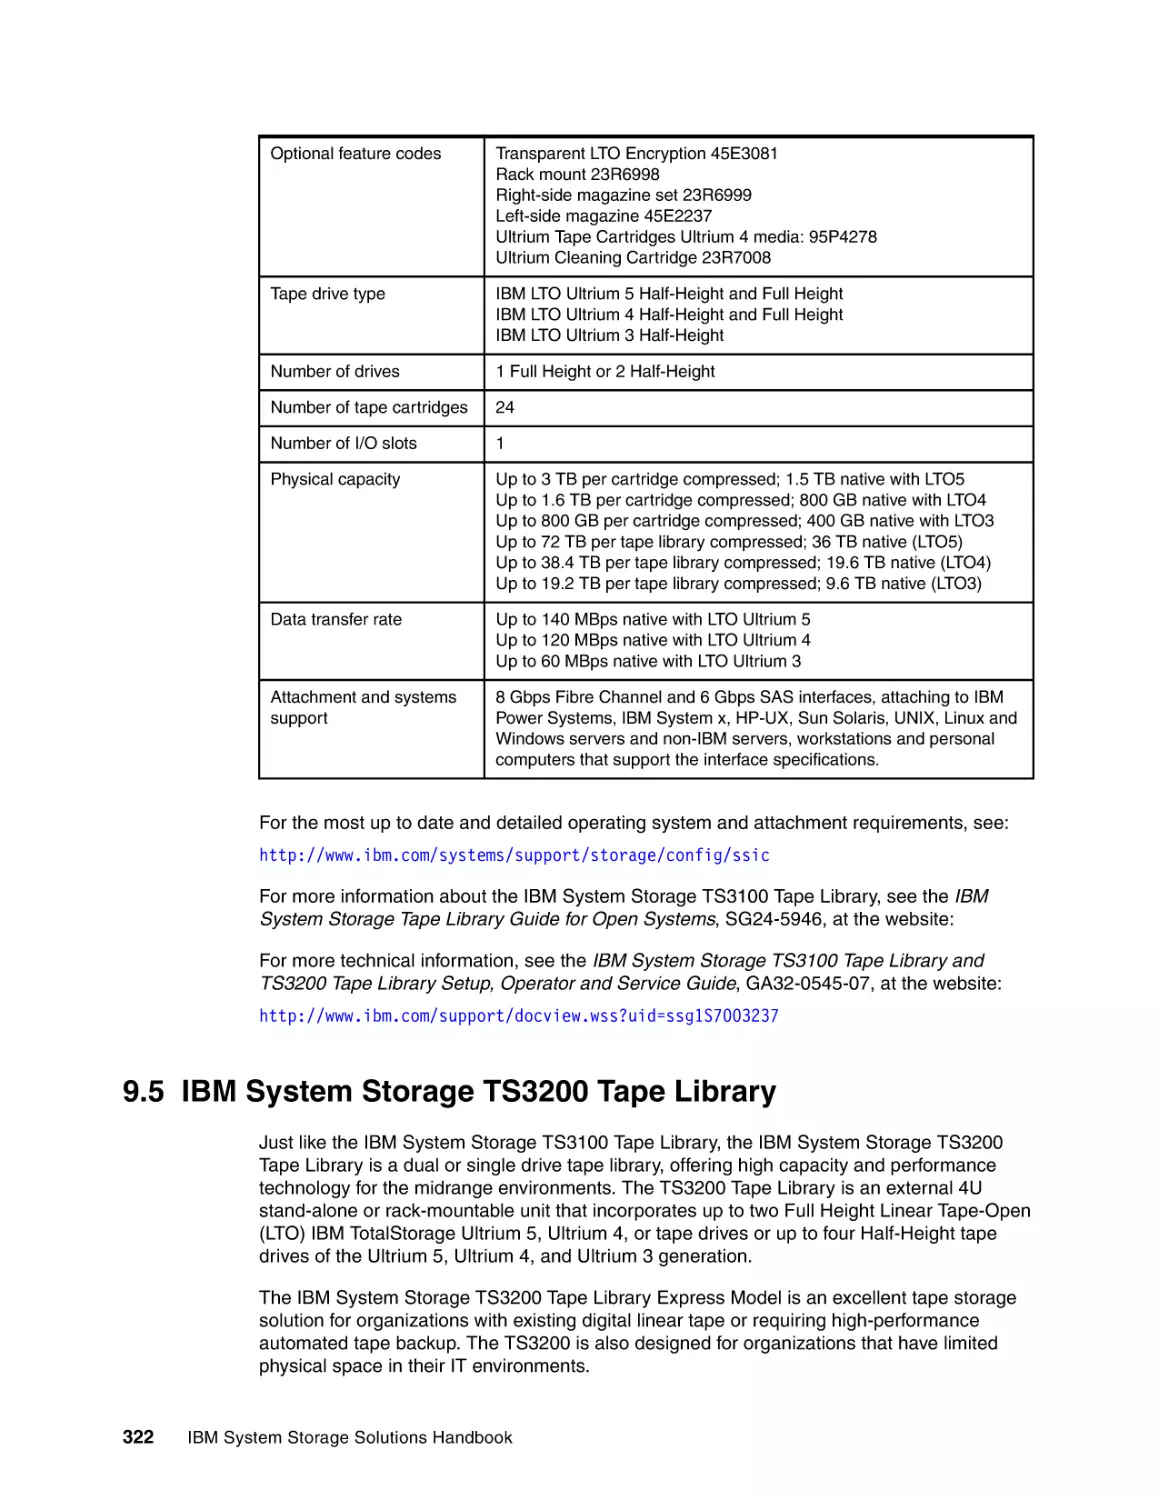 9.5 IBM System Storage TS3200 Tape Library